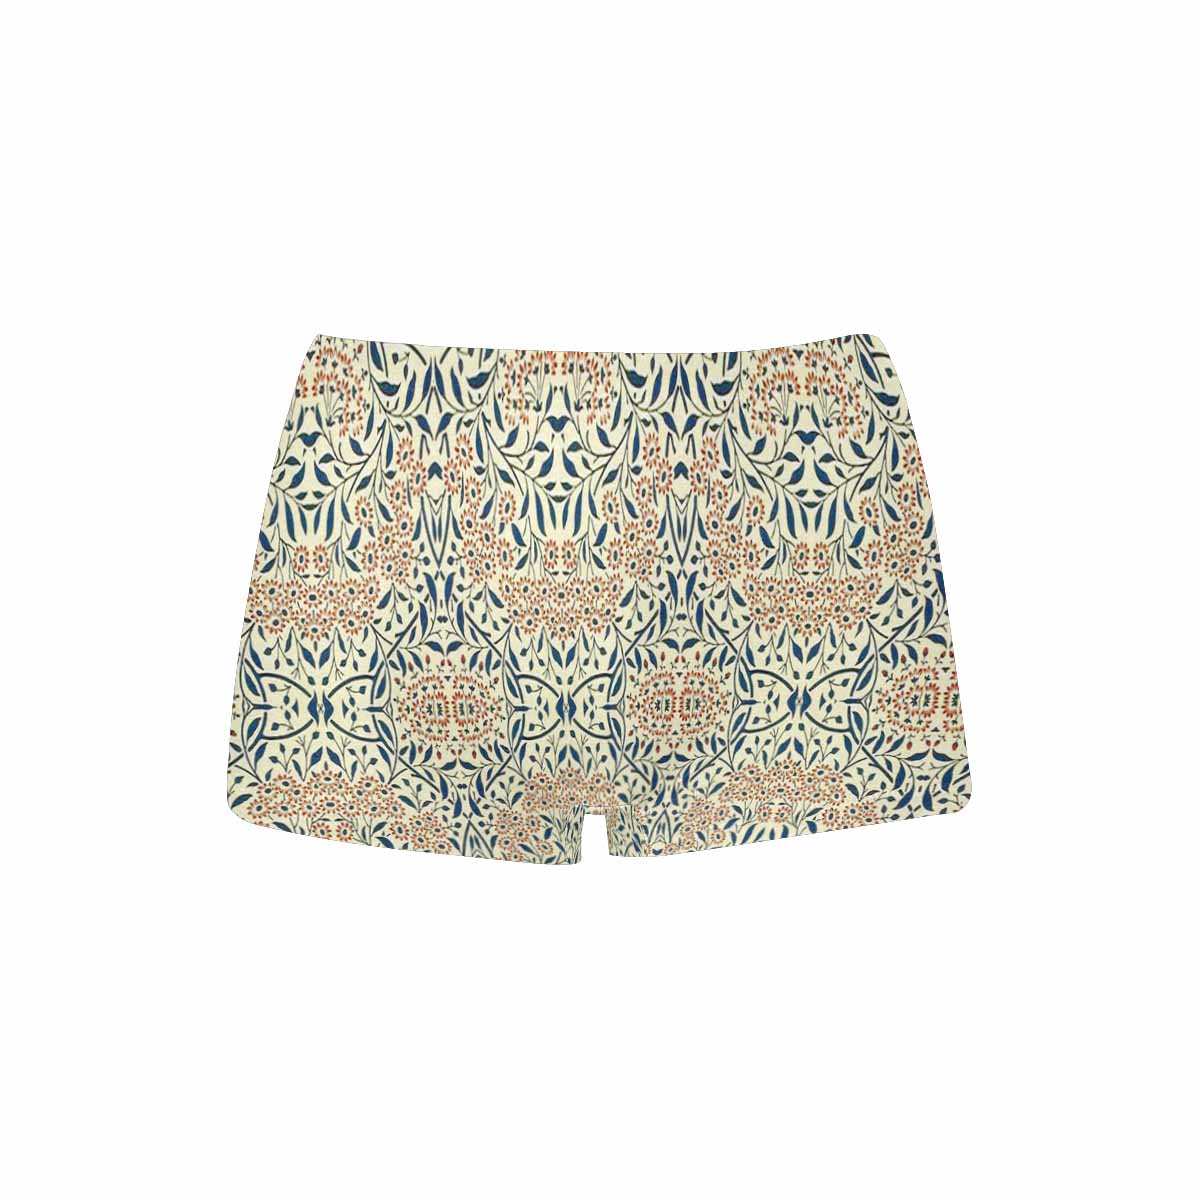 Antique general boyshorts, daisy dukes, pum pum shorts, panties, design 02